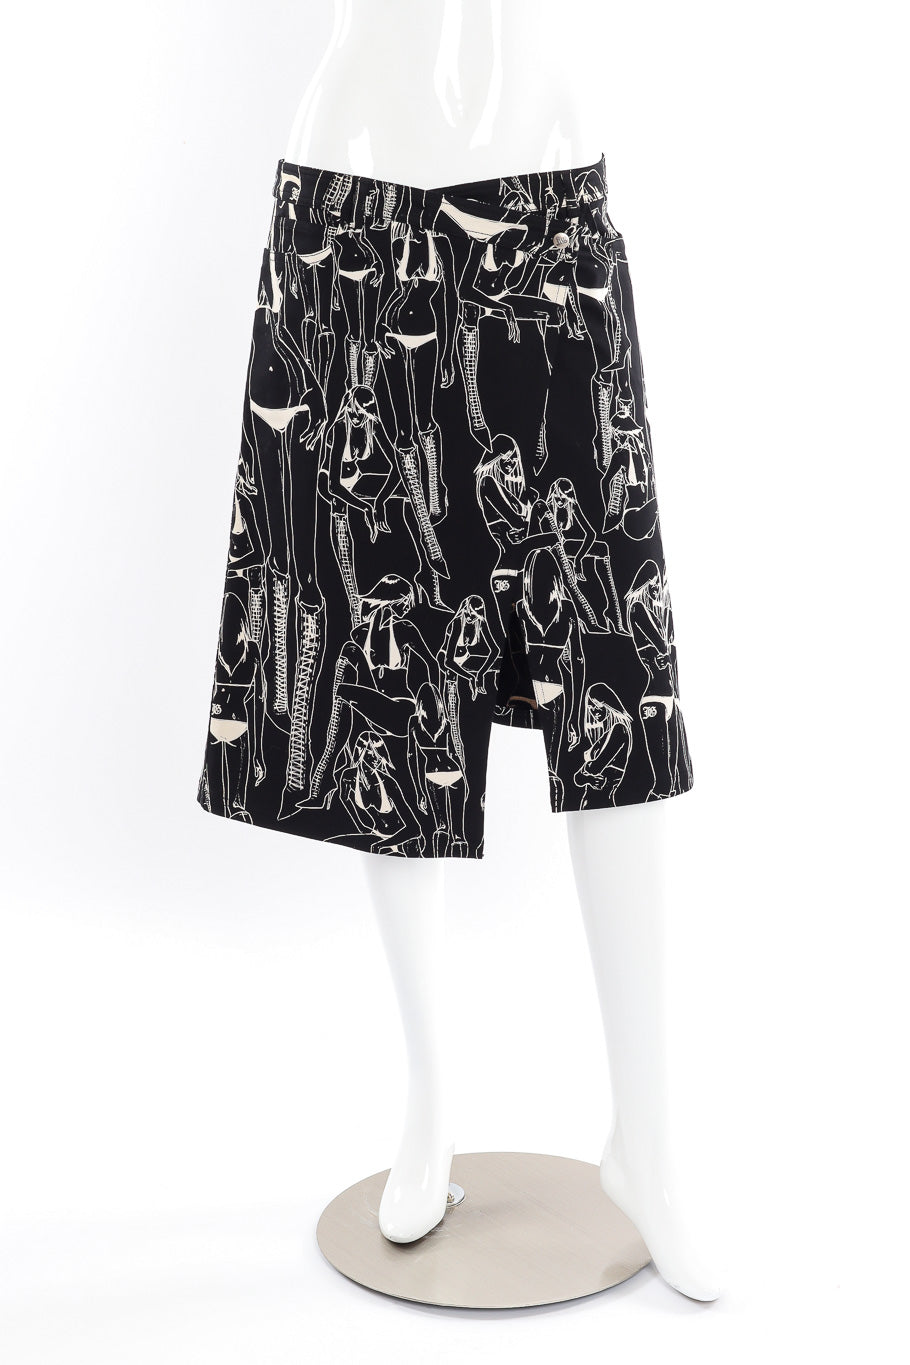 Wrap skirt by John Galliano mannequin front @recessla